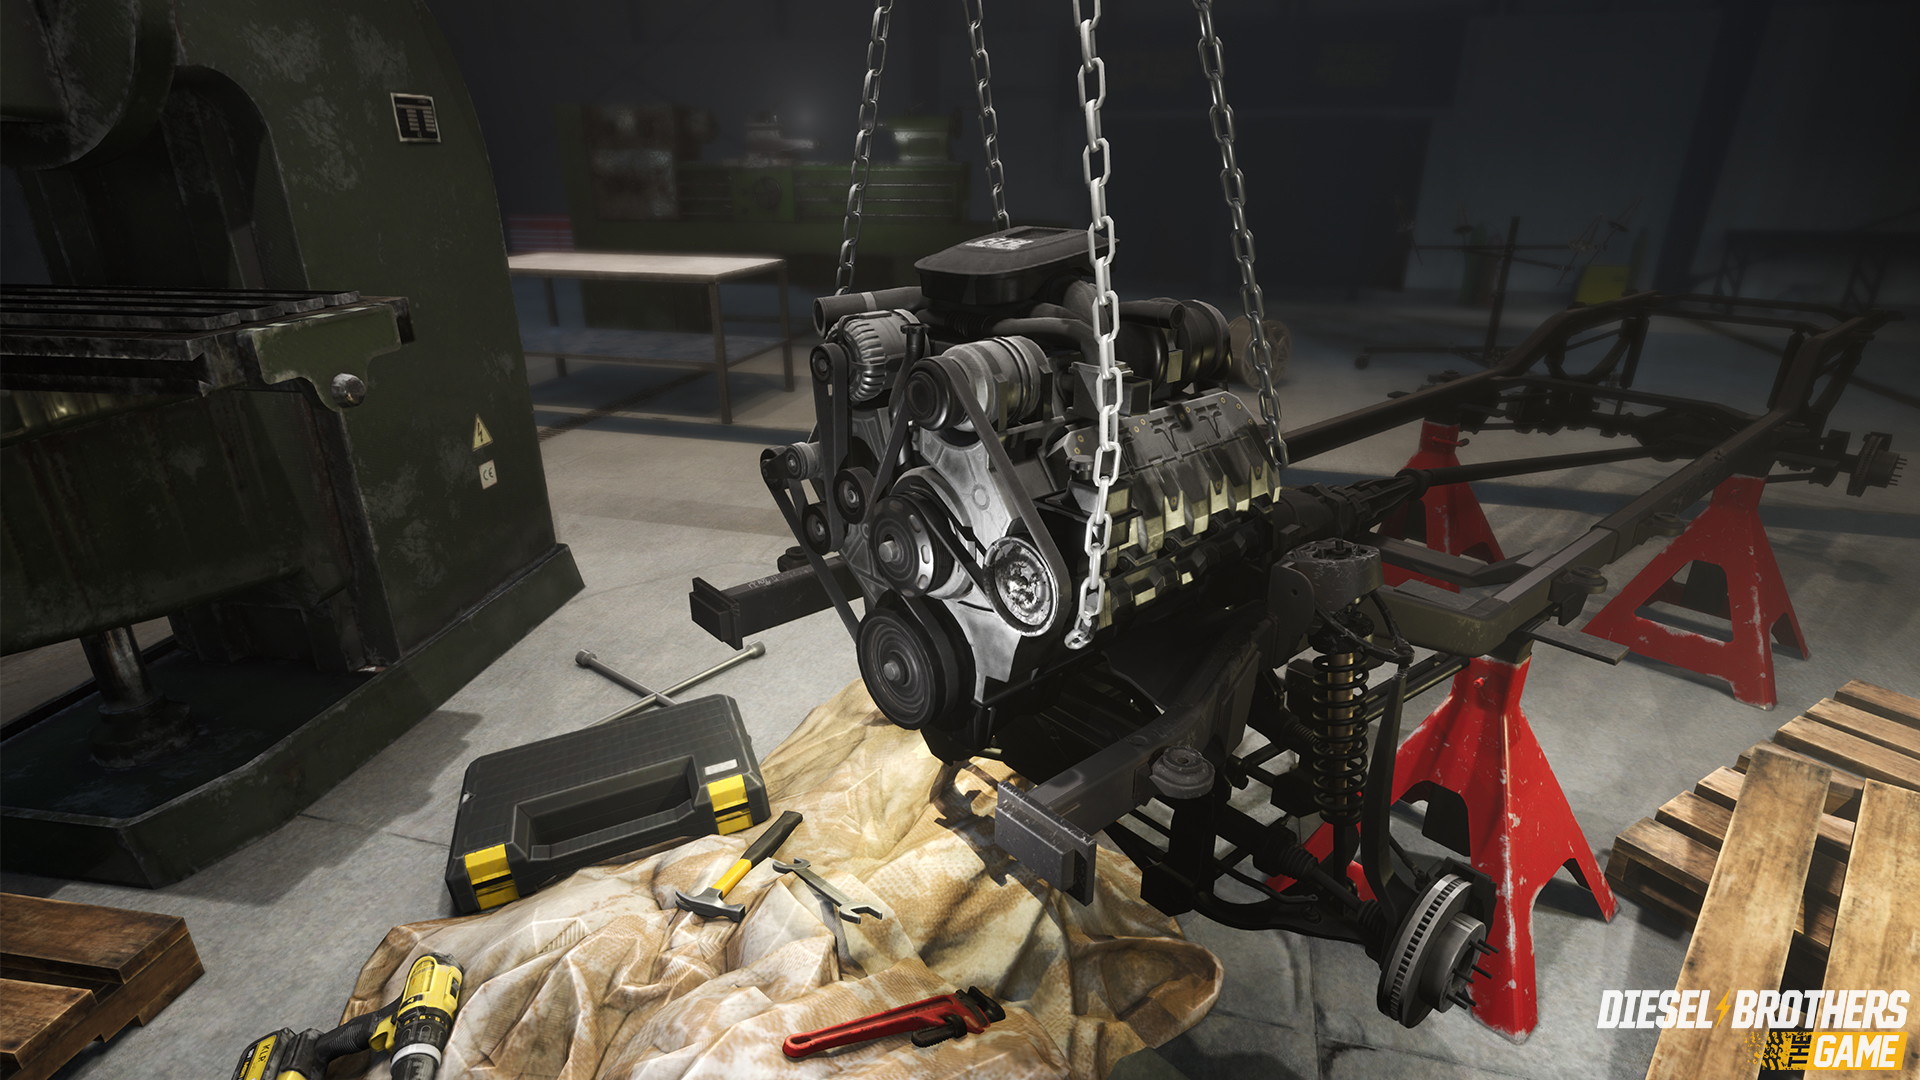 Diesel Brothers: Truck Building Simulator - screenshot 5